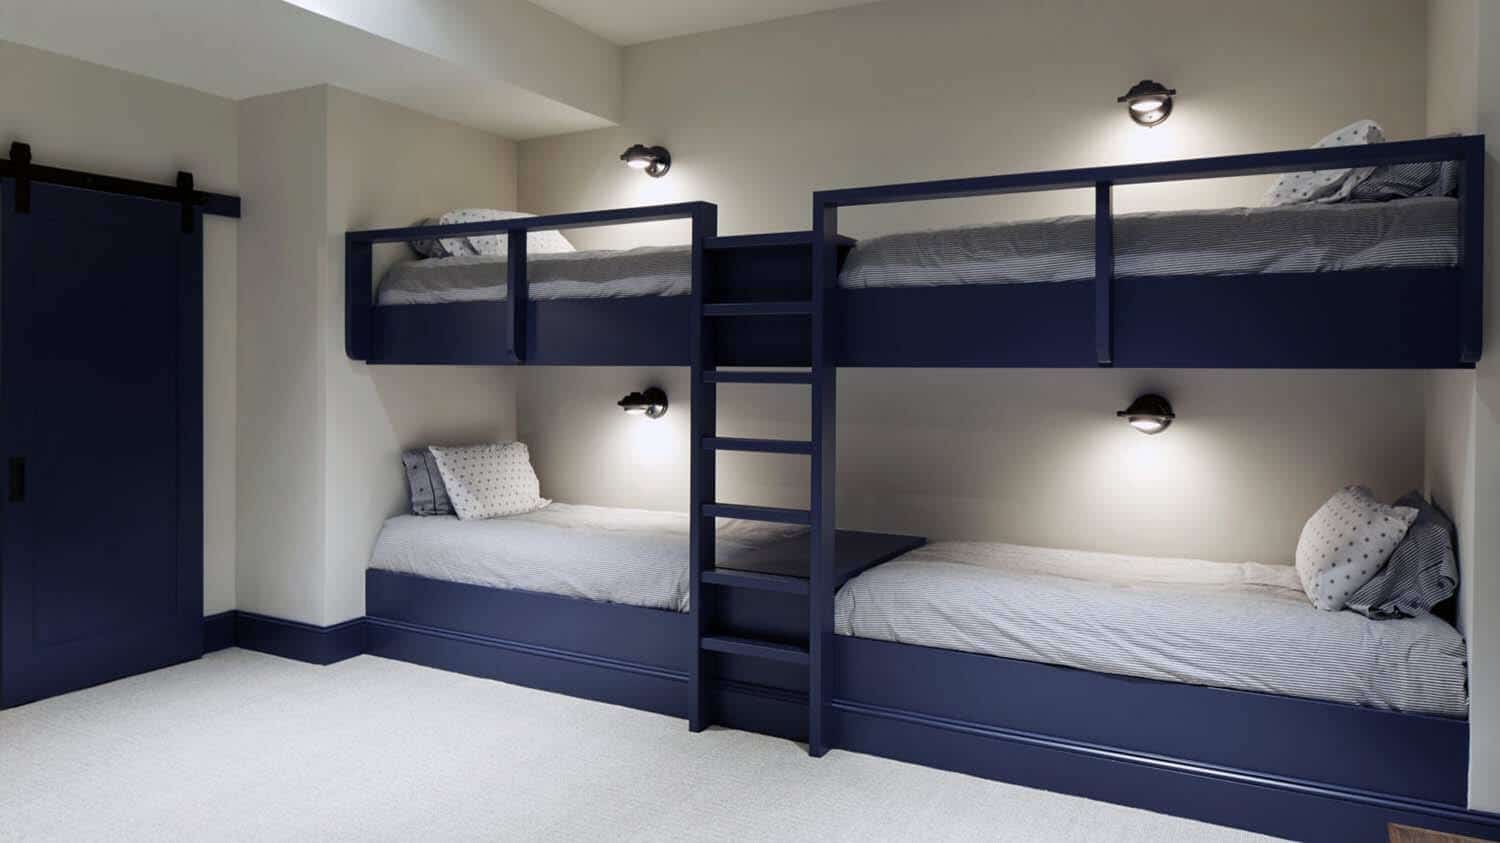 shingle-style-home-bunk-bedroom